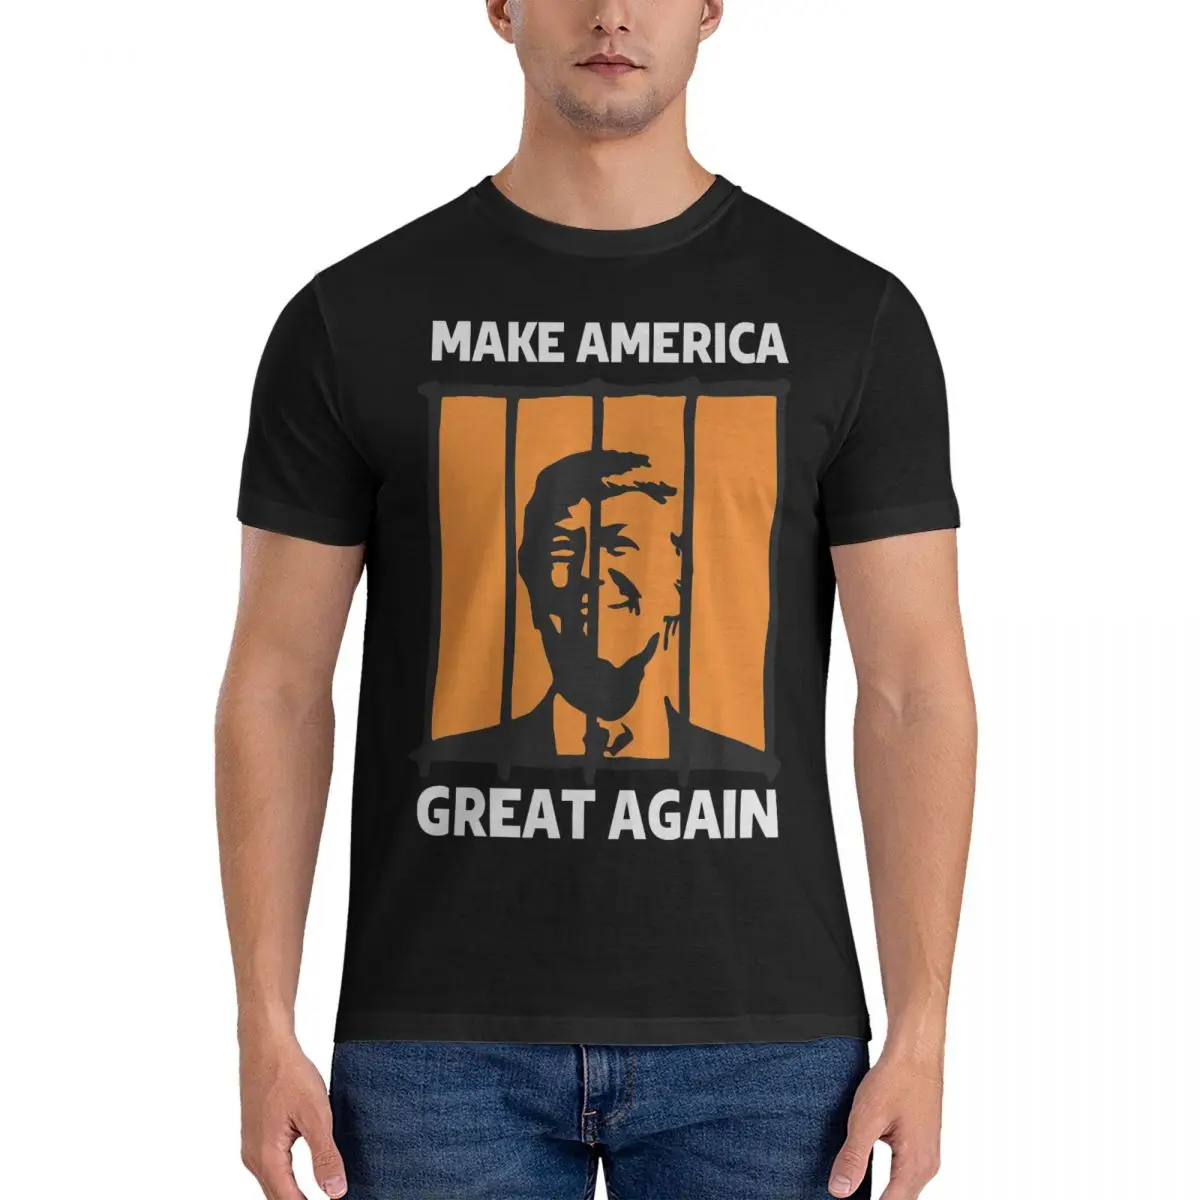 

Make Americe Great Again T Shirts for Men Cotton Hipster T-Shirt Round Neck Free Trump Tee Shirt Short Sleeve Tops 4XL 5XL 6XL